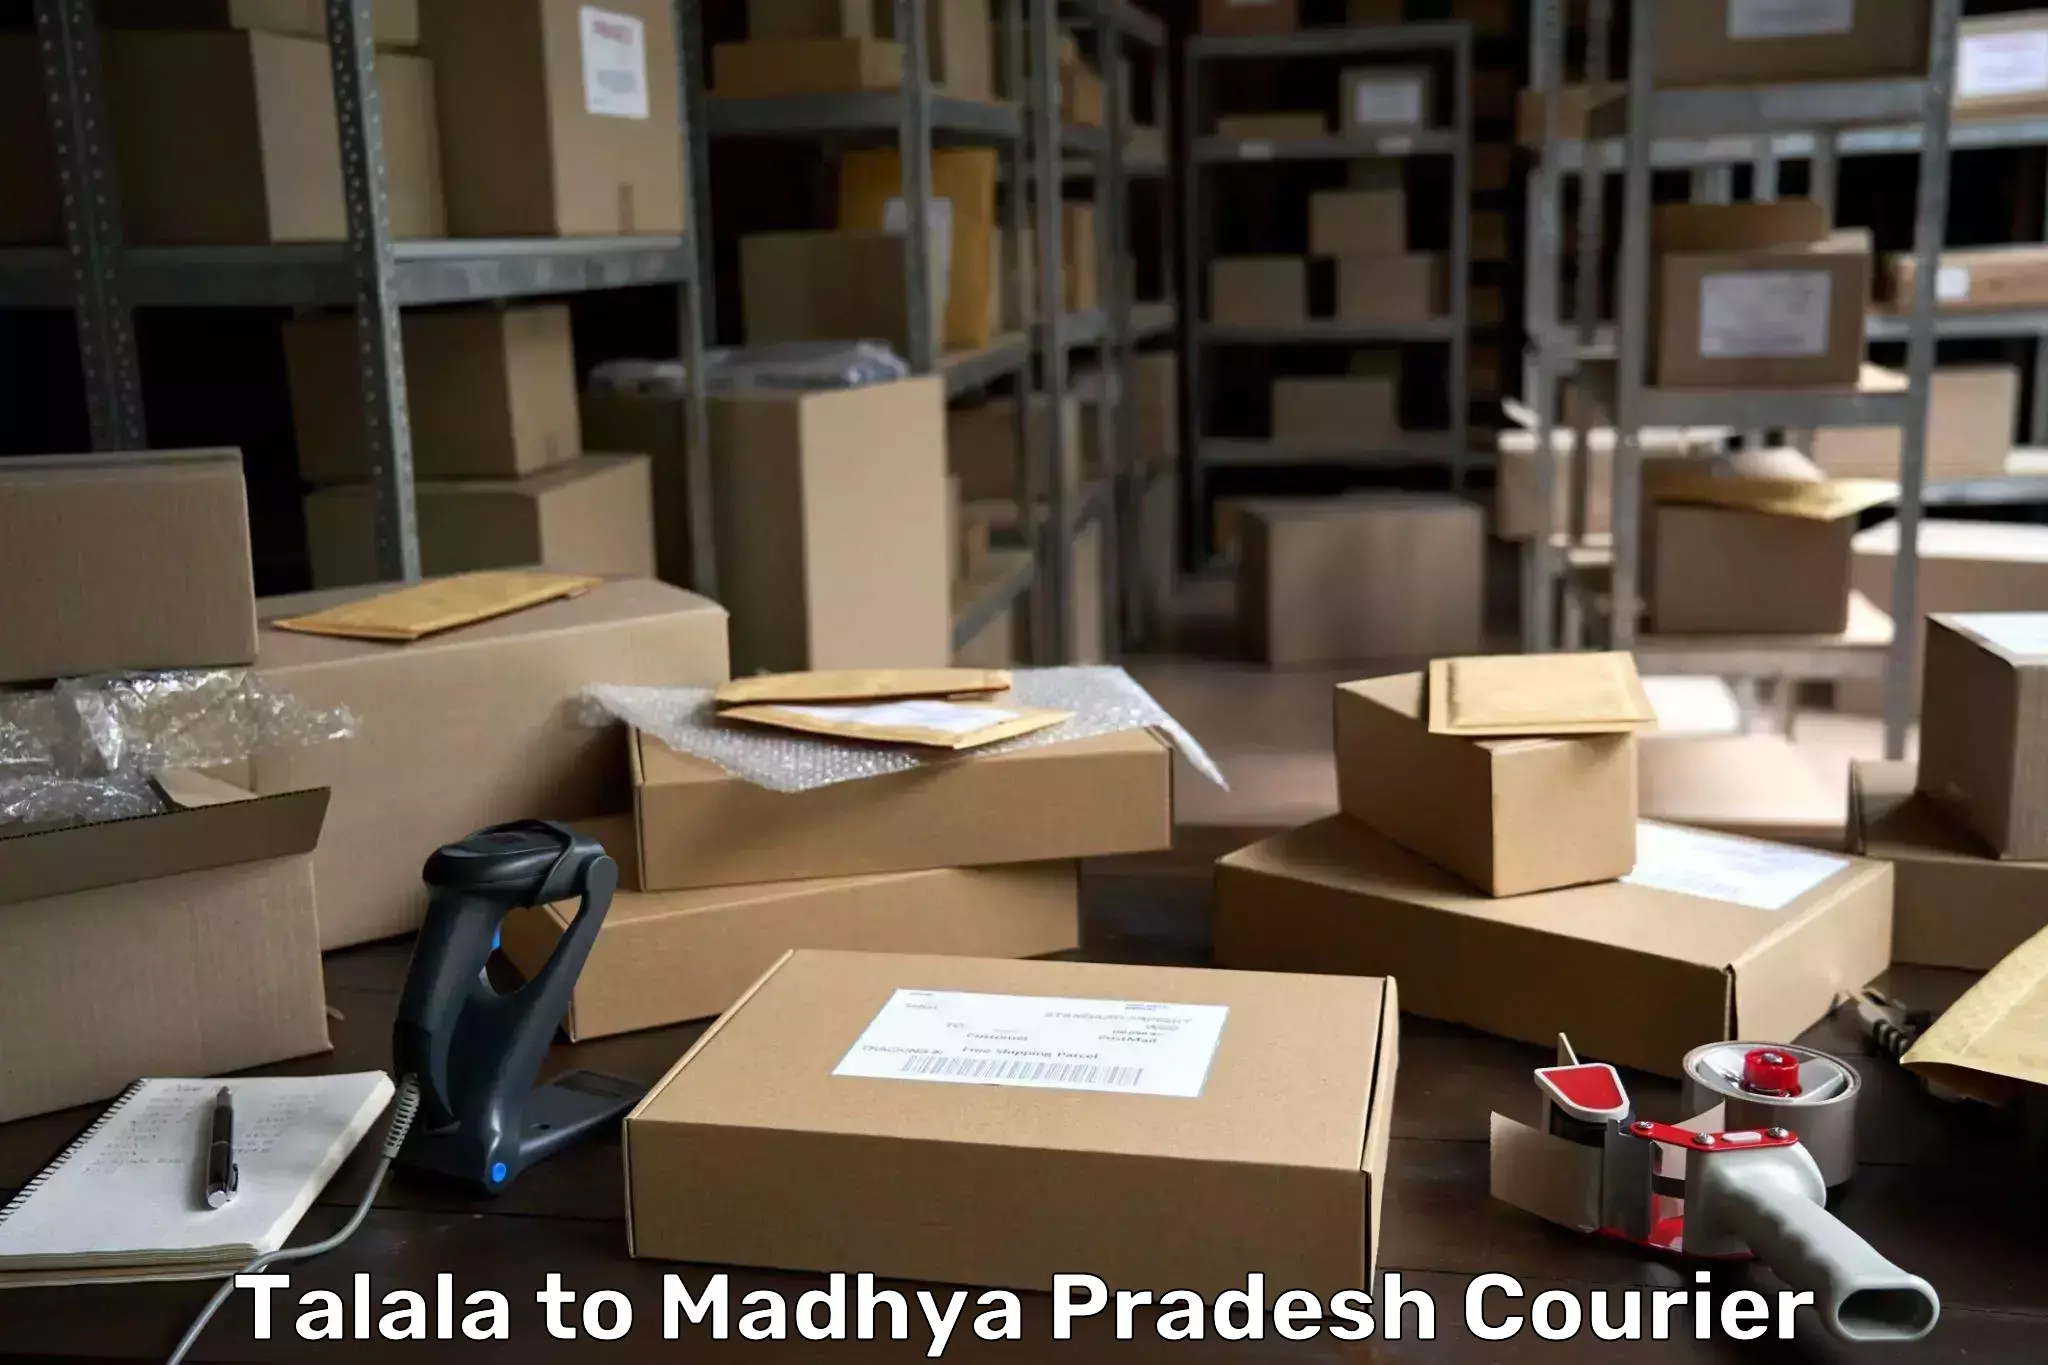 Express delivery network Talala to Madhya Pradesh